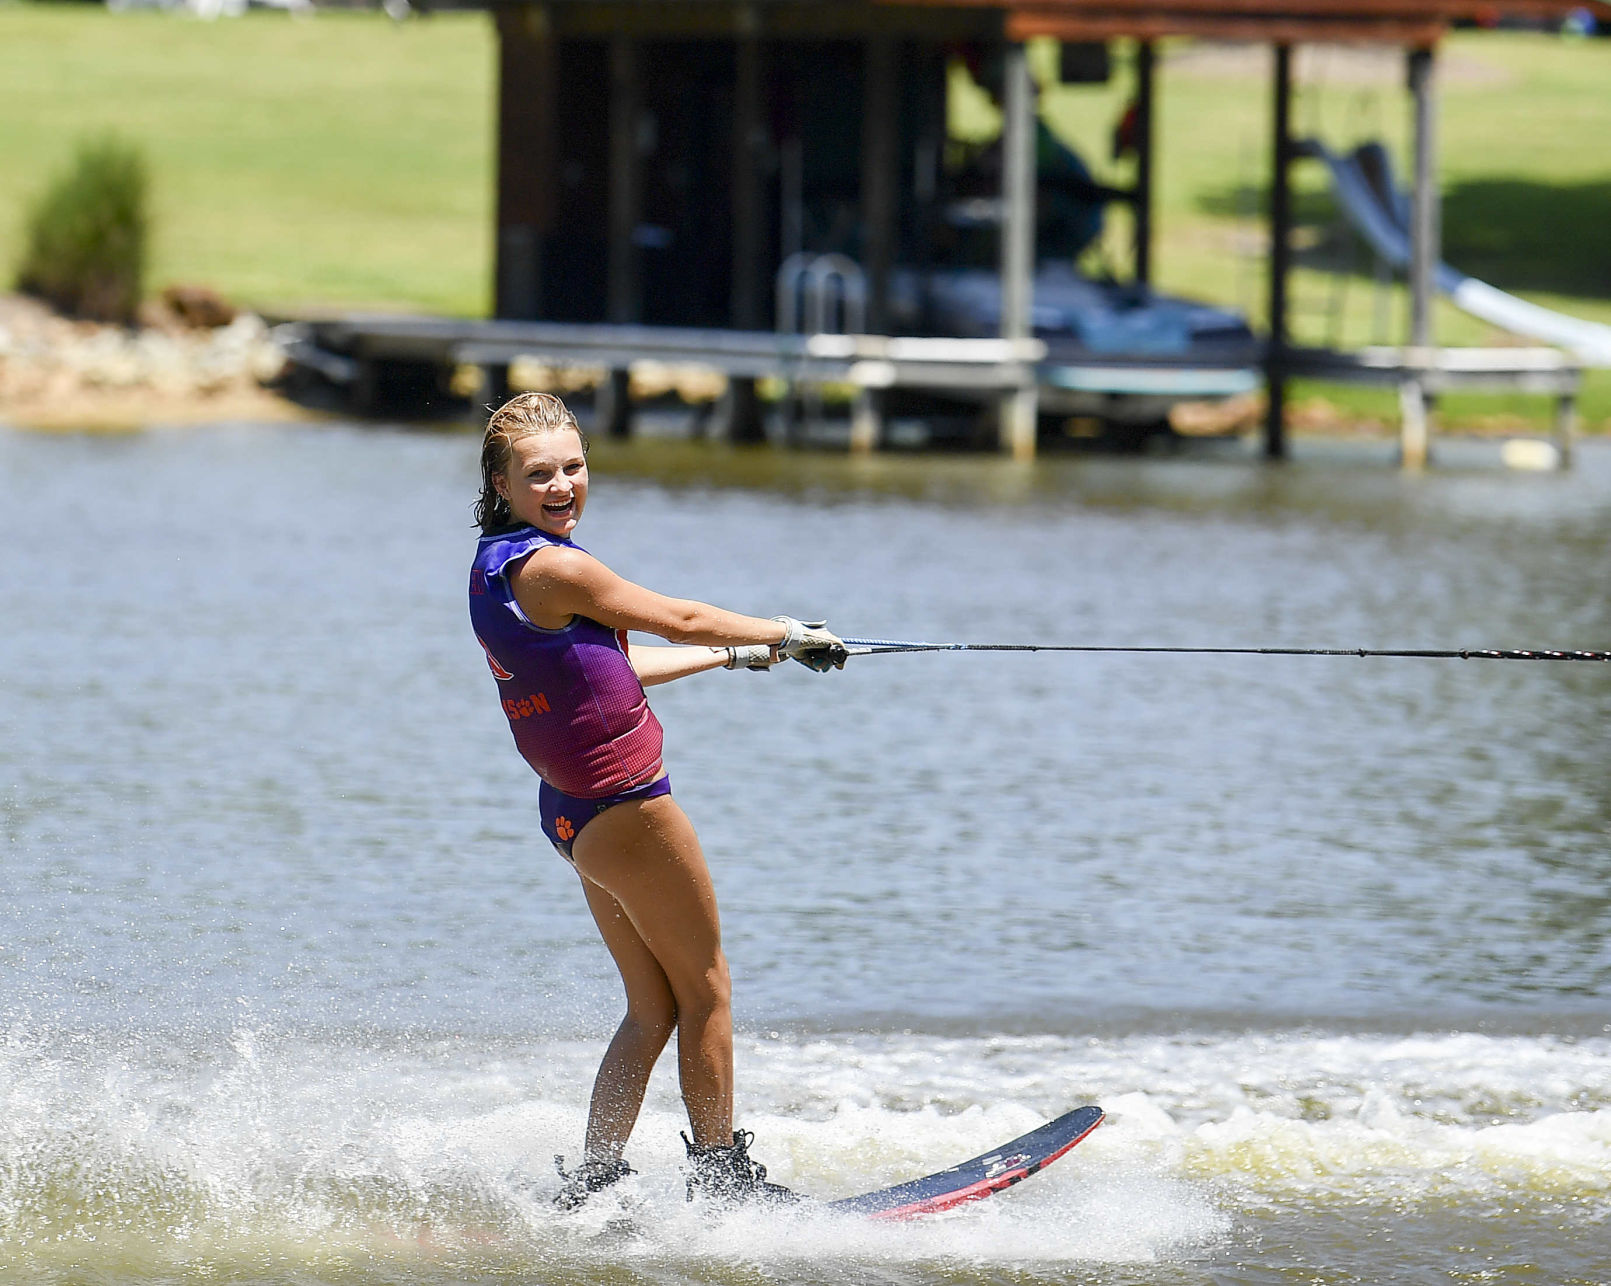 PHOTOS: South Carolina state water skiing championships